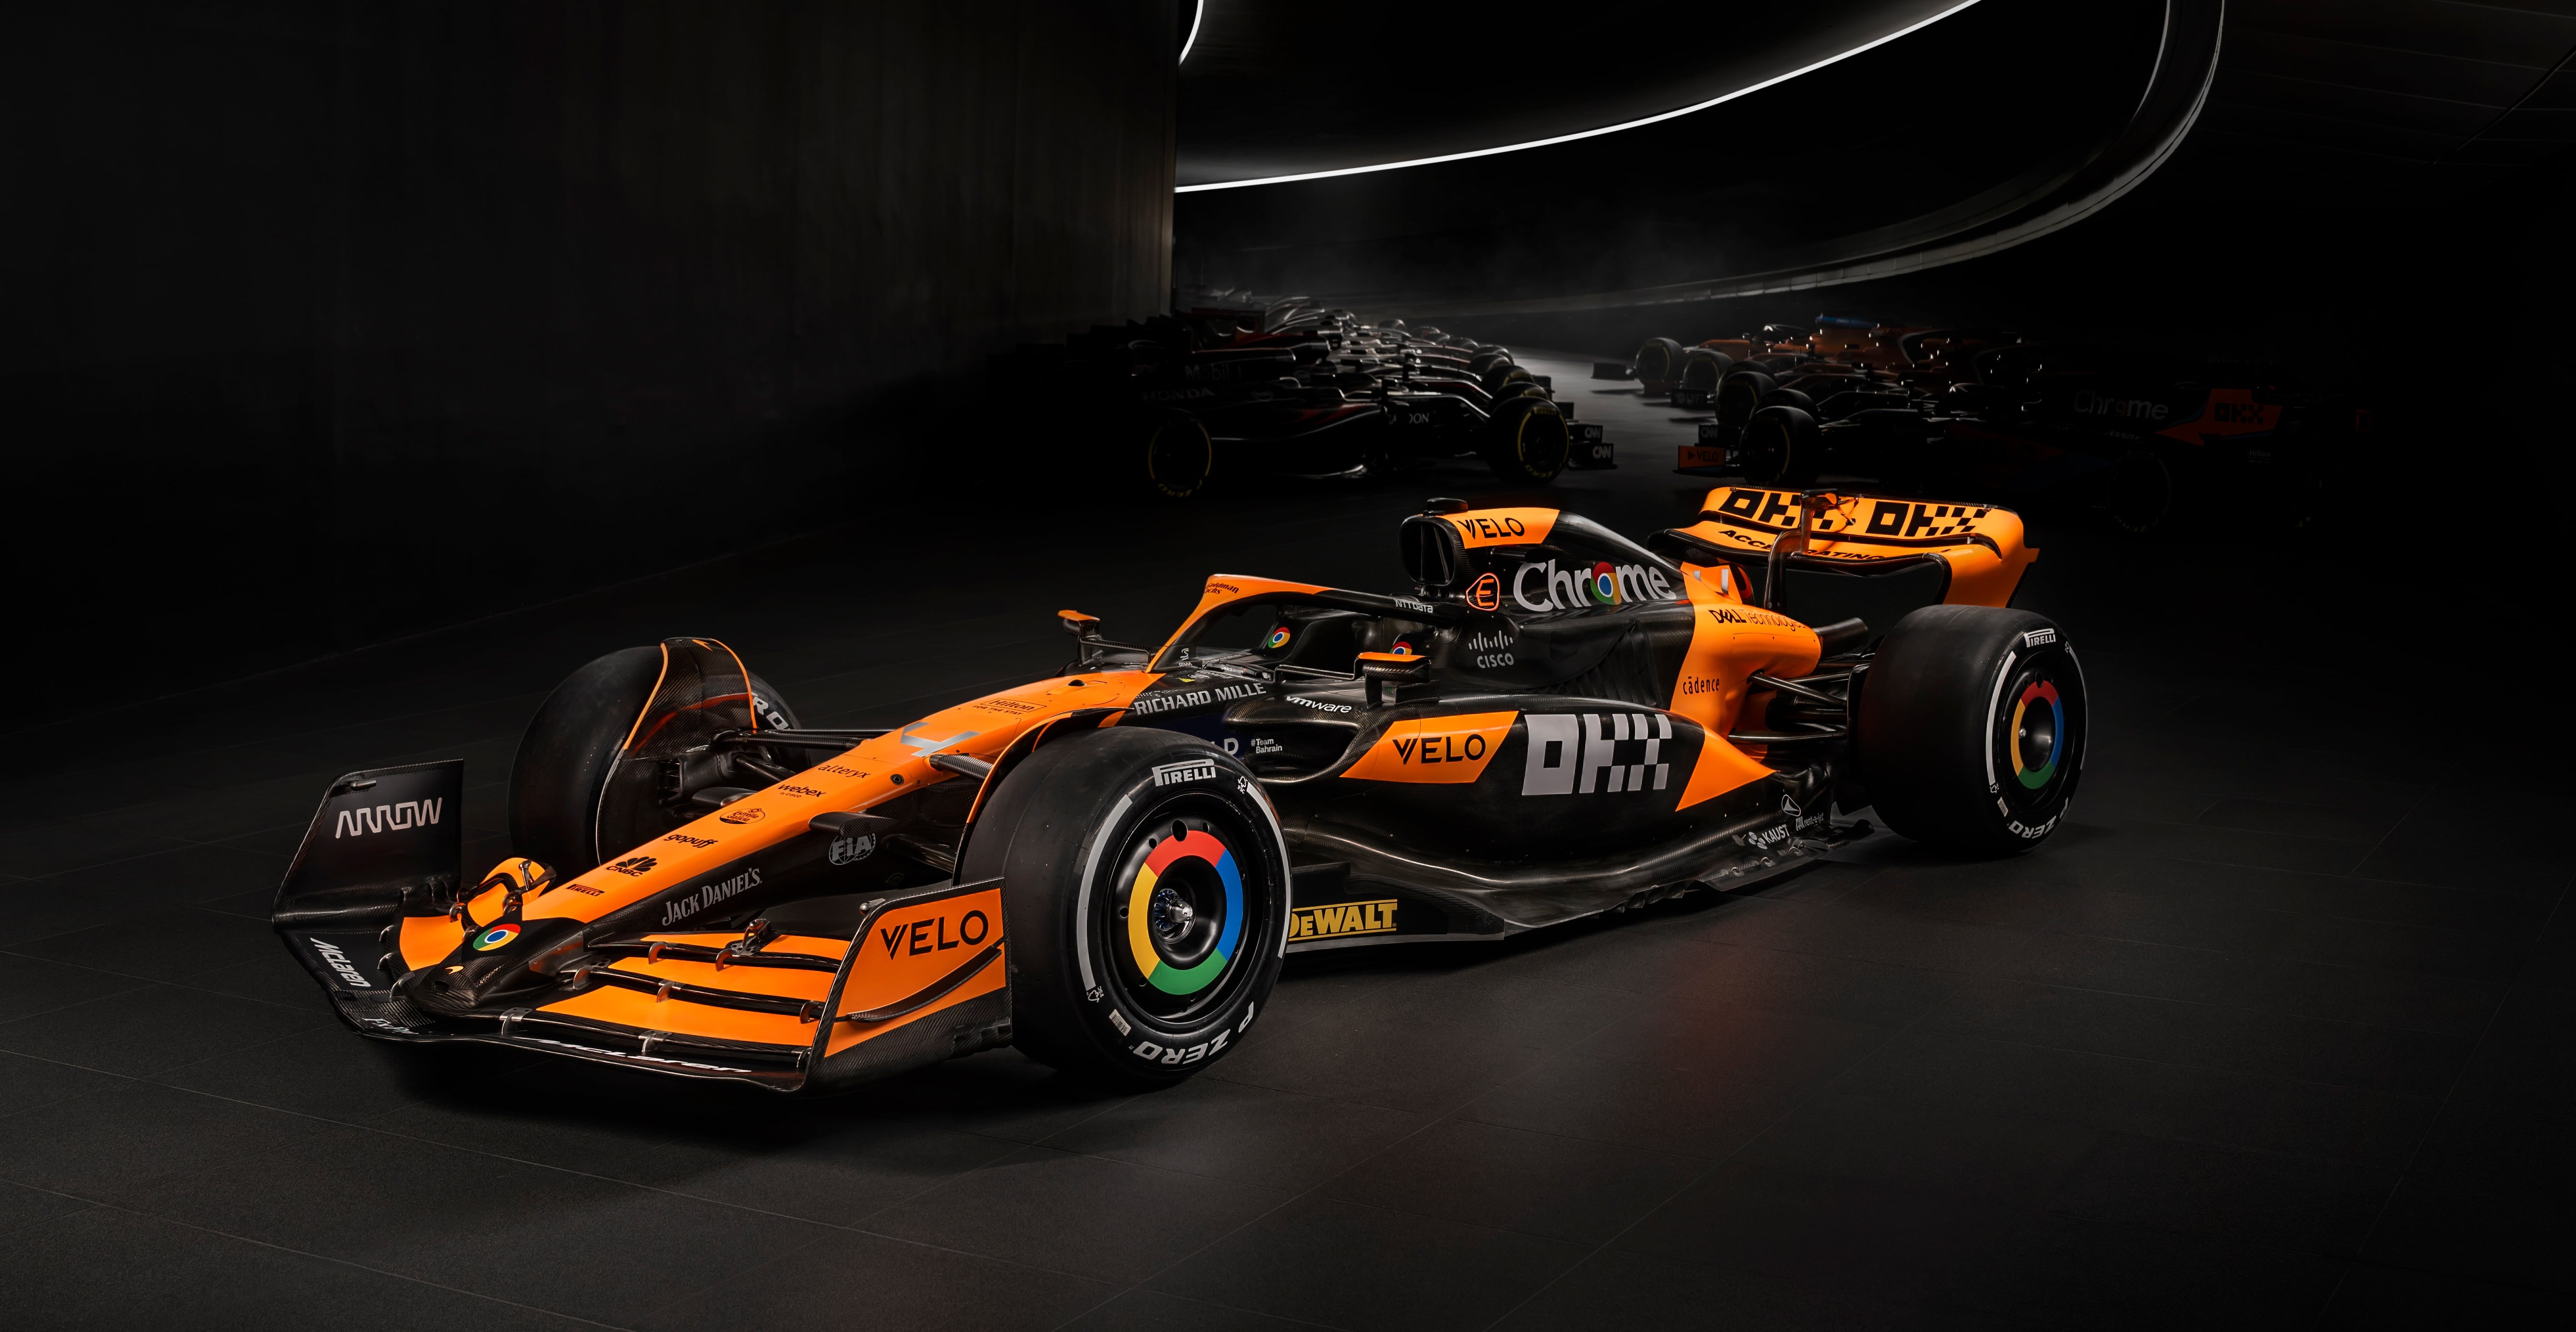 McLaren Racing F1 car with the OKX livery